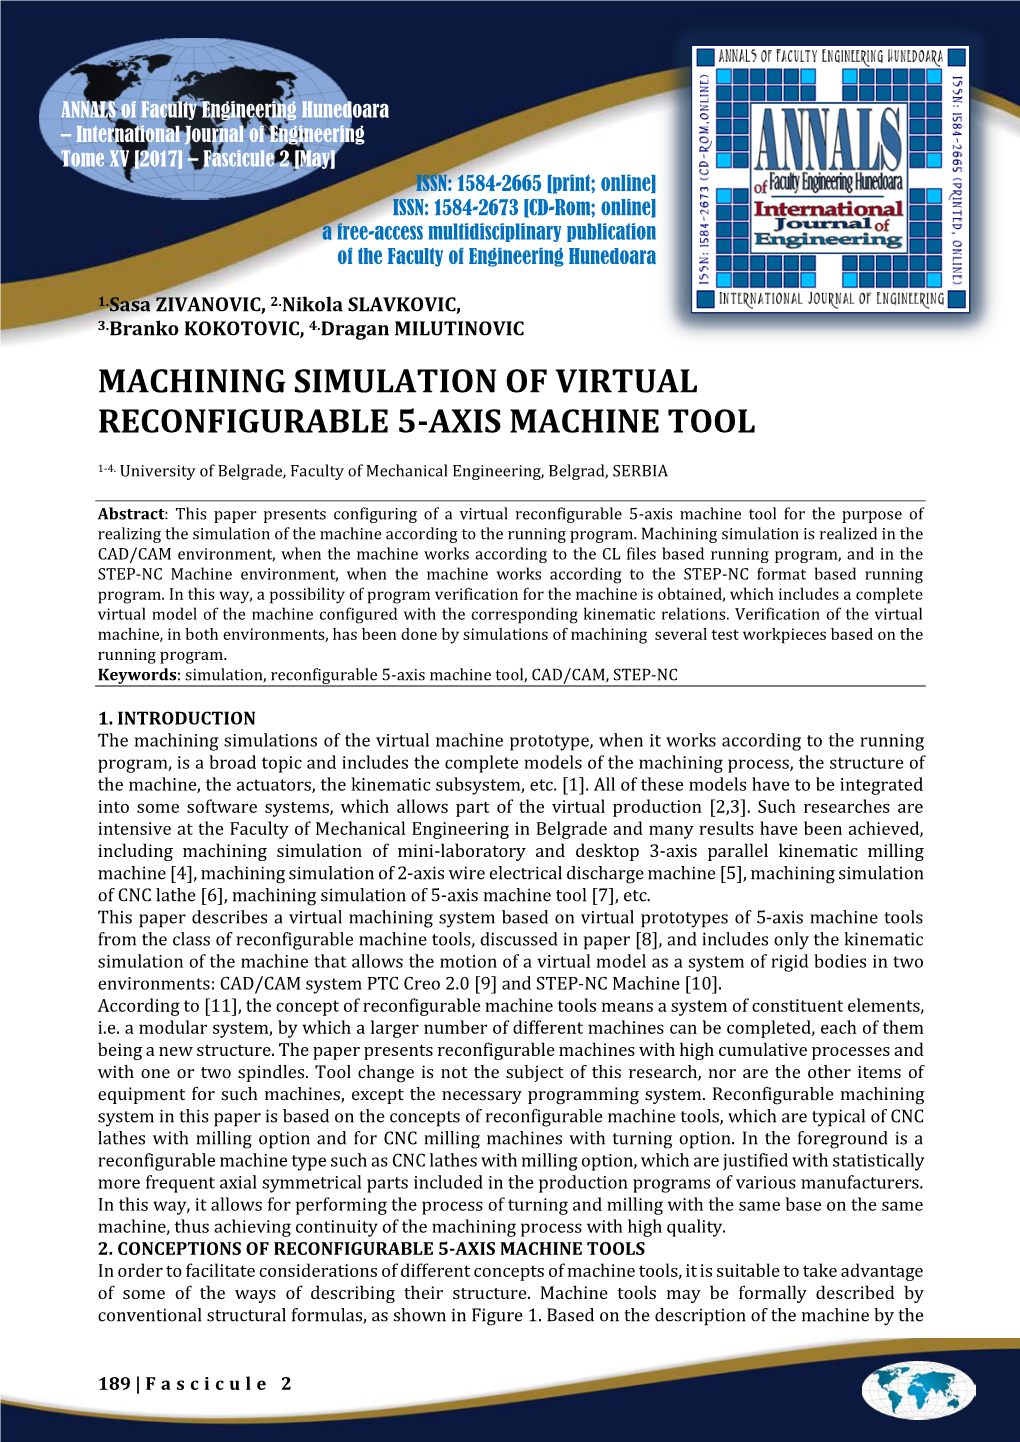 Machining Simulation of Virtual Reconfigurable 5-Axis Machine Tool